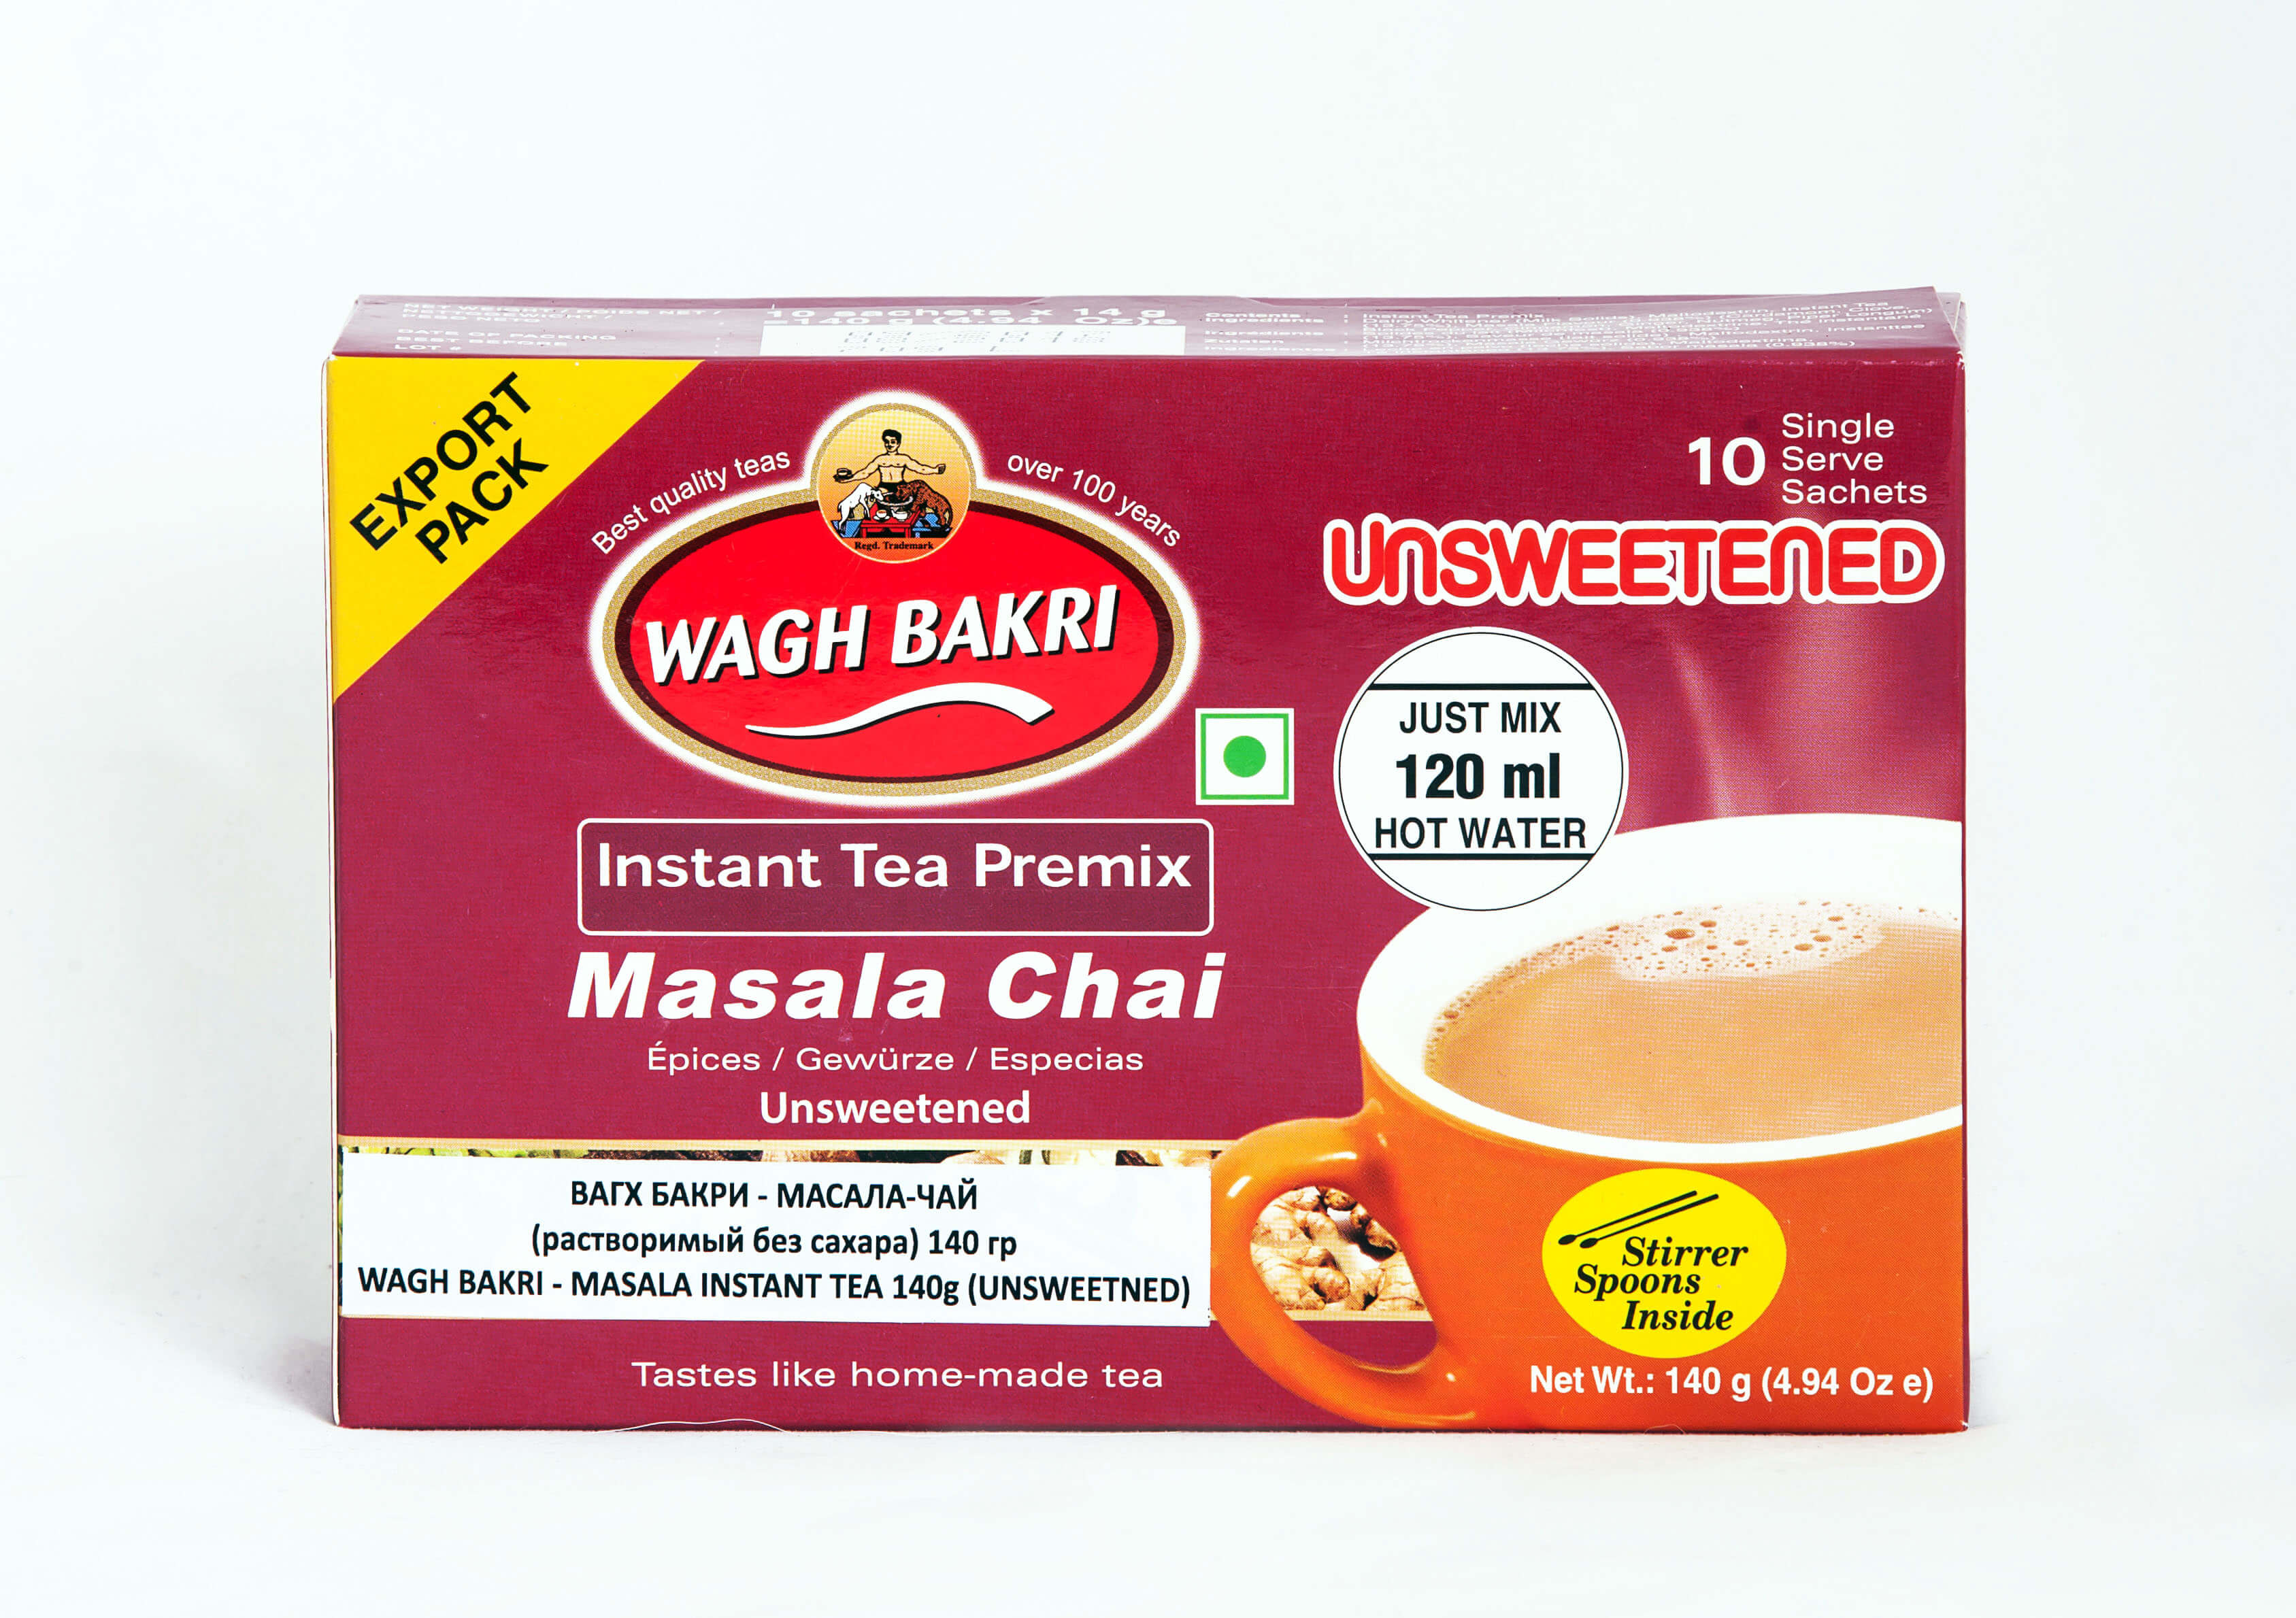 ВАГХ БАКРИ-Растворимый Масала чай 140гбез сахара/WAGH BAKRI-Masala unsweetened instant tea 140g